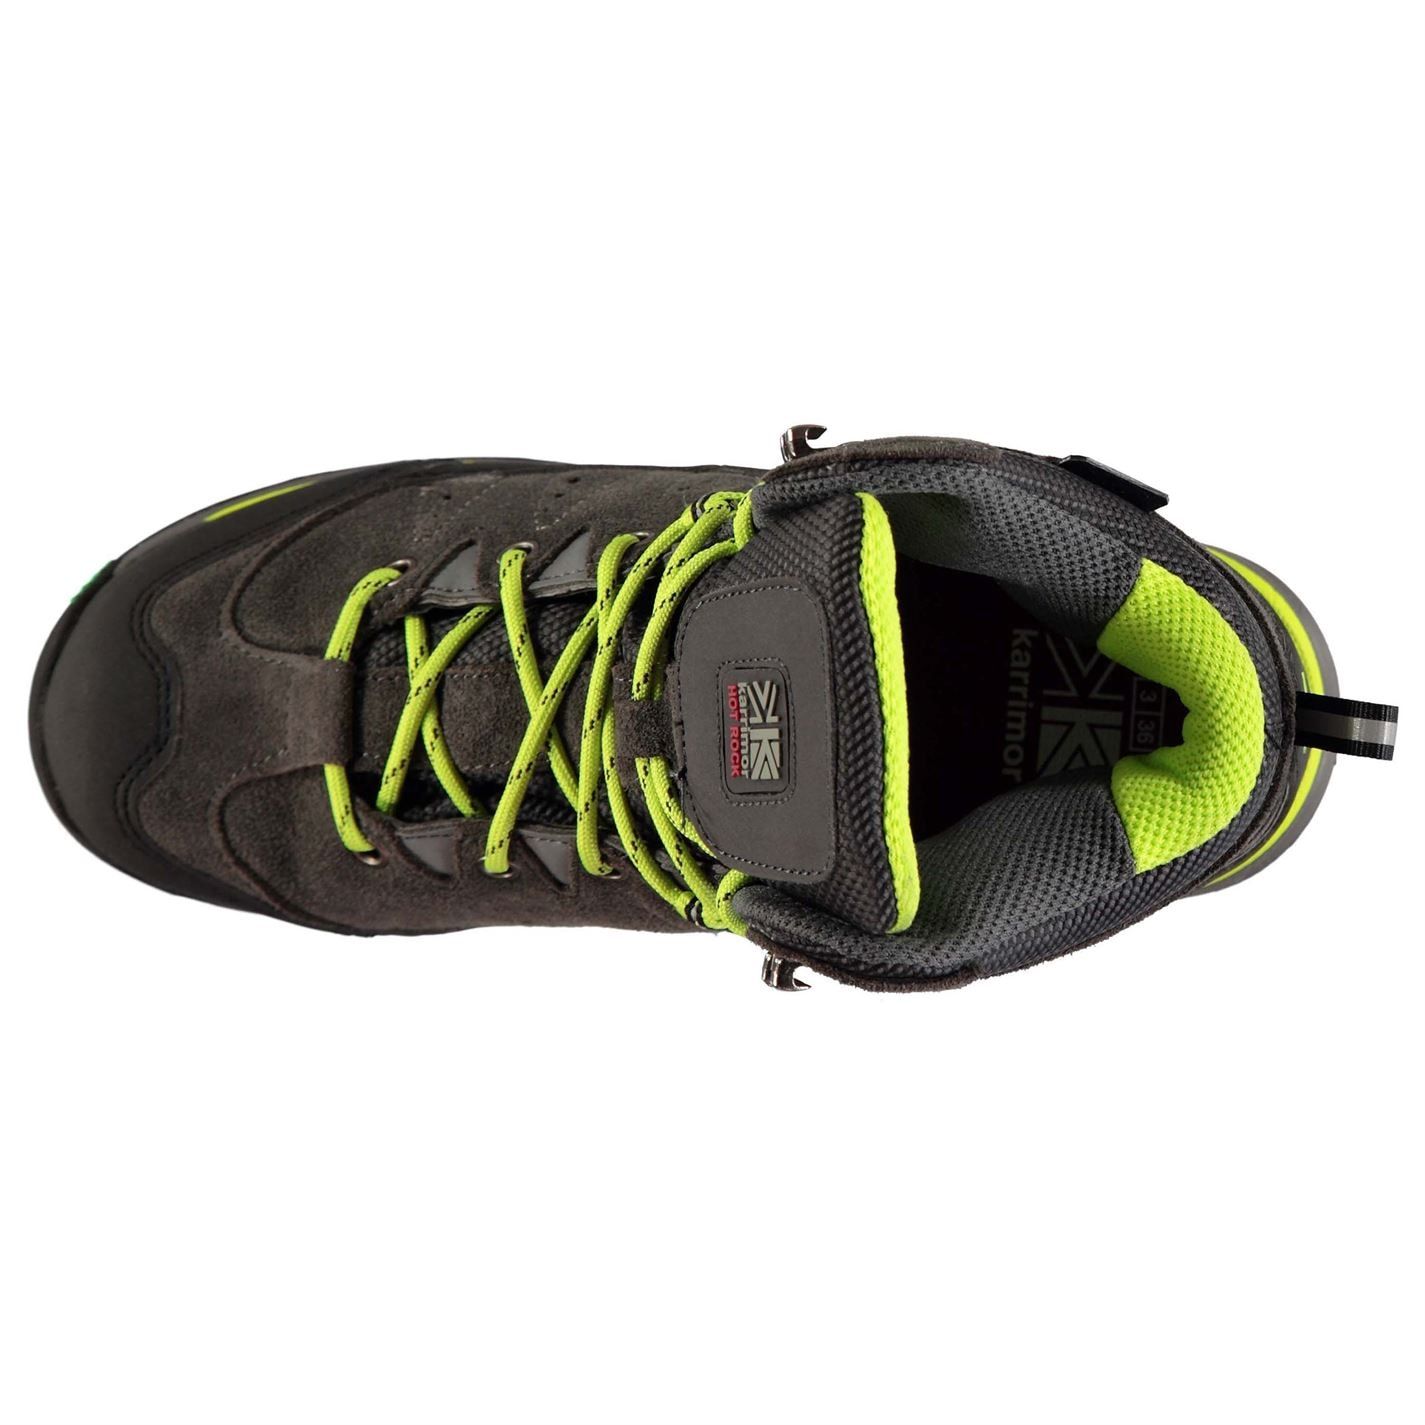 Karrimor Kids Hot Rock Junior Walking Boots Breathable Hiking Shoes Outdoor